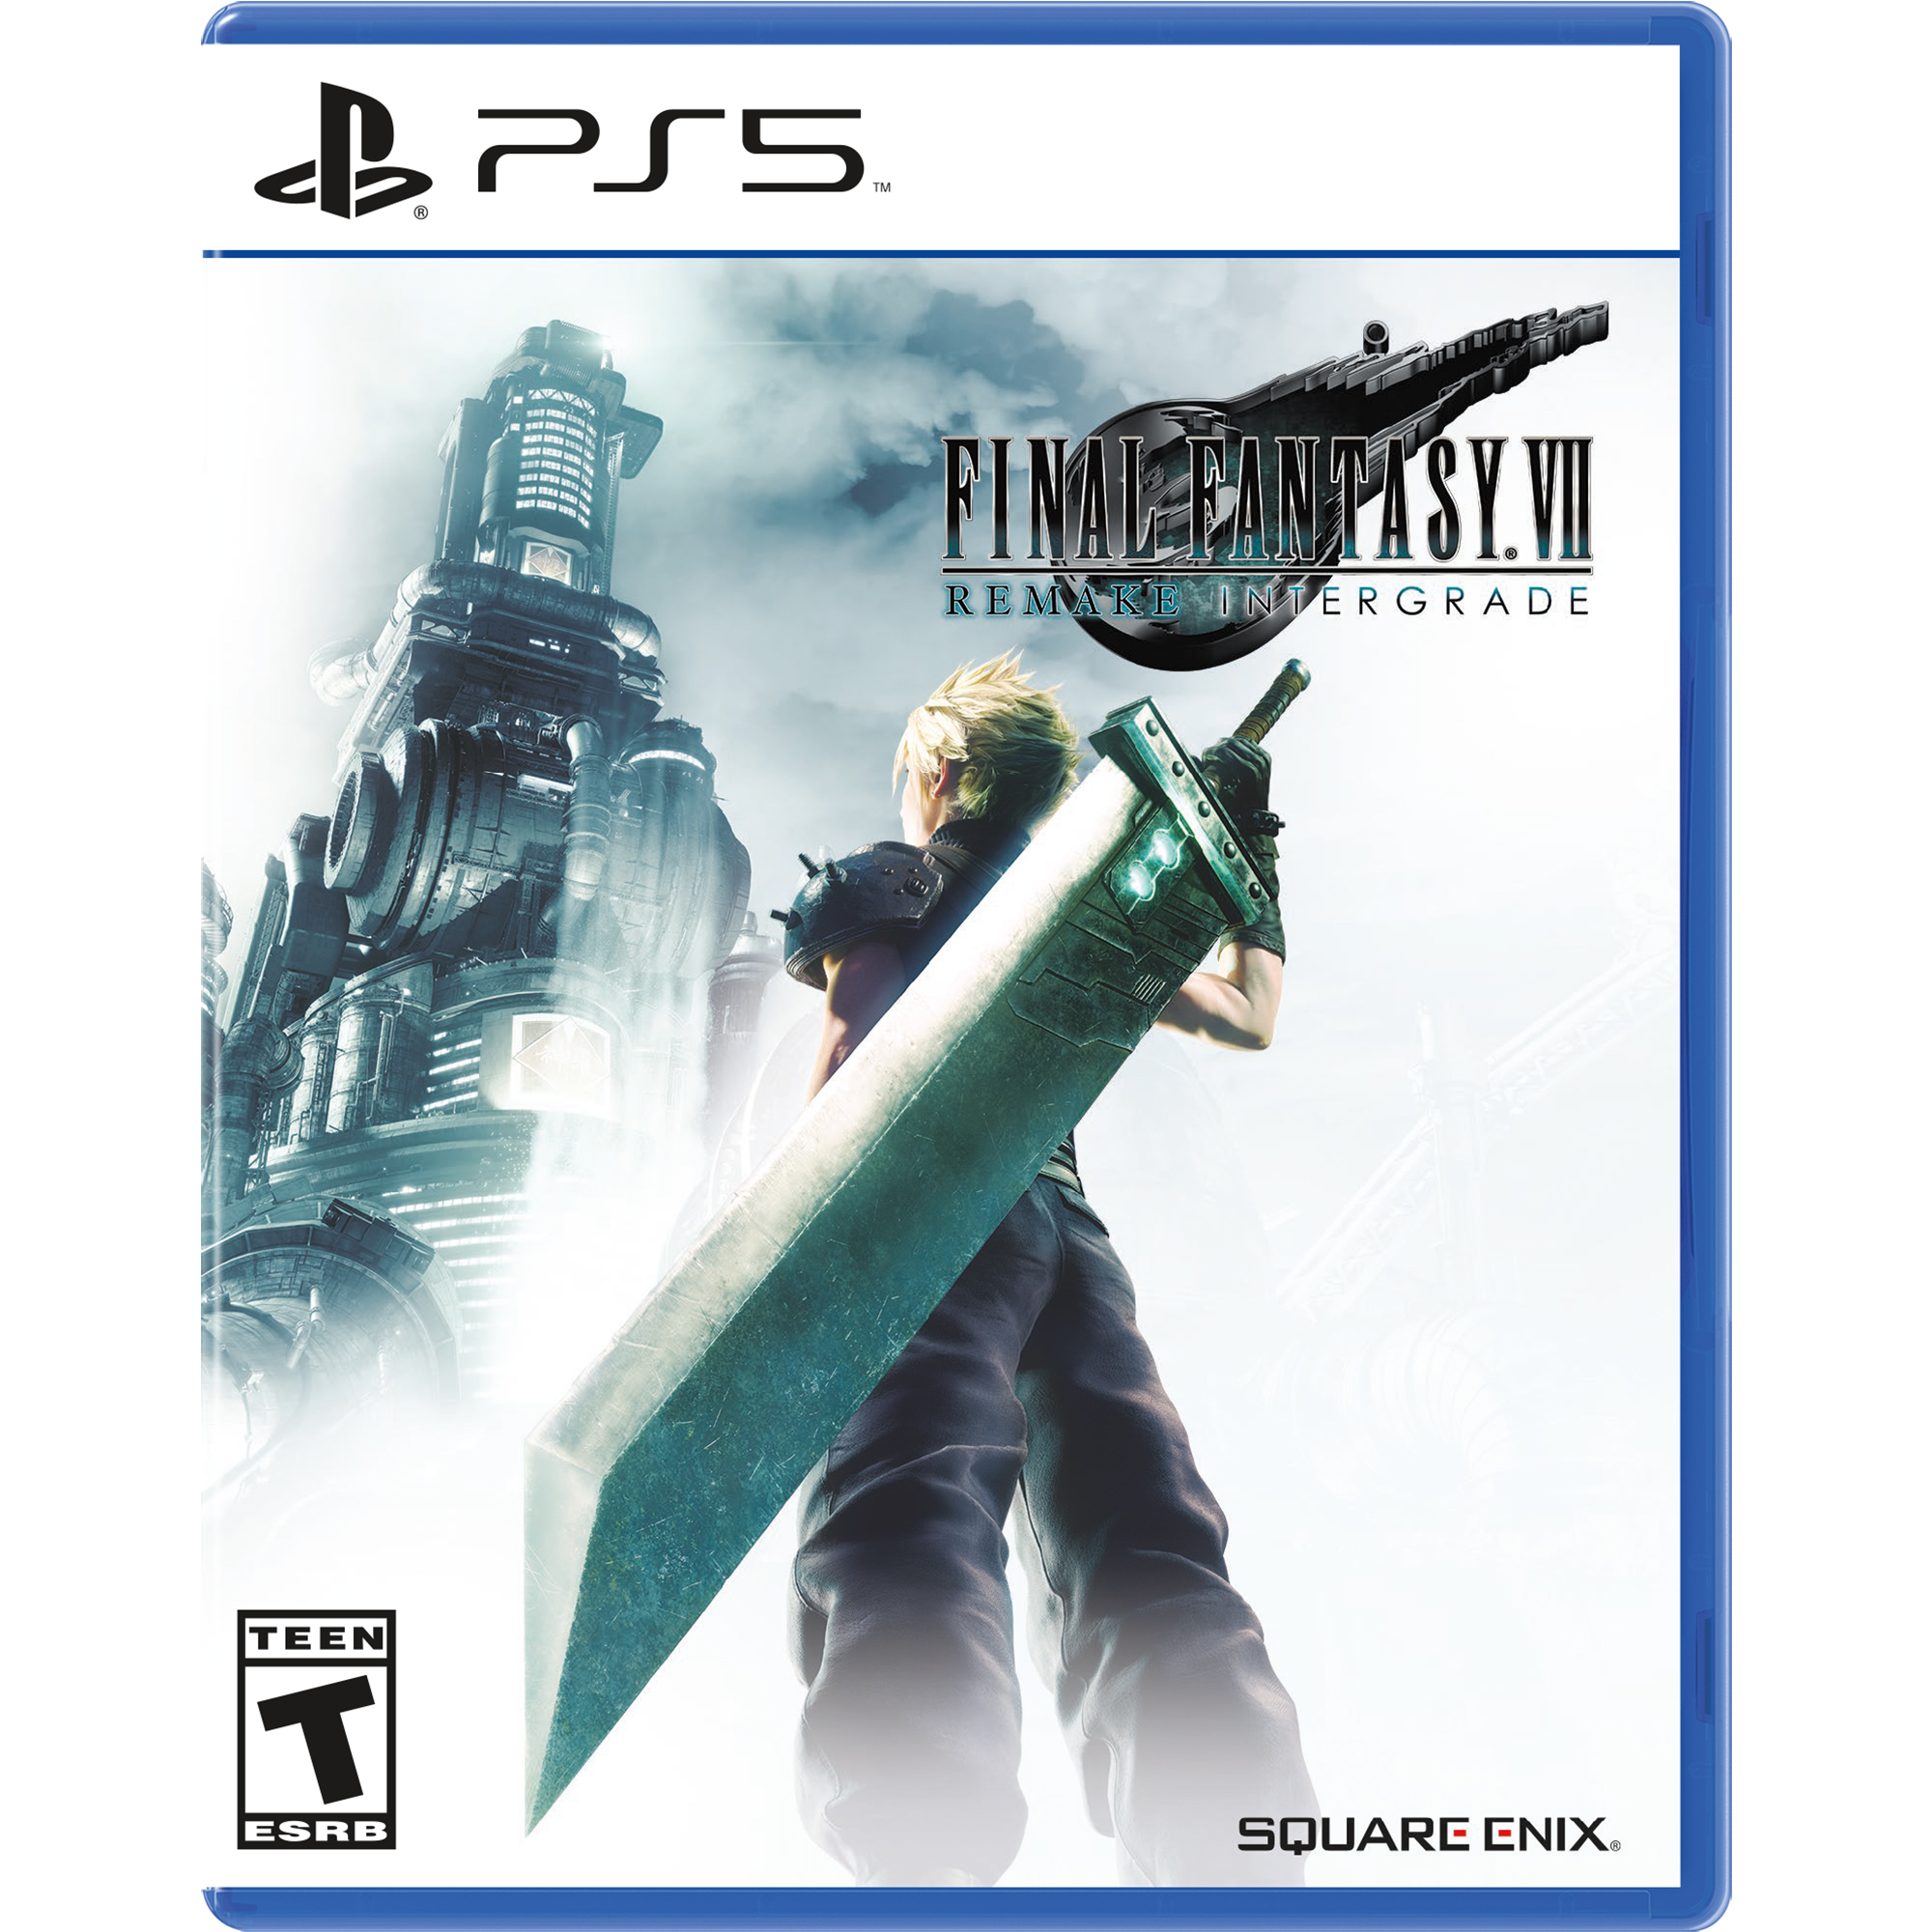 Final Fantasy VII Remake Intergrade - PlayStation 5 - image 1 of 11